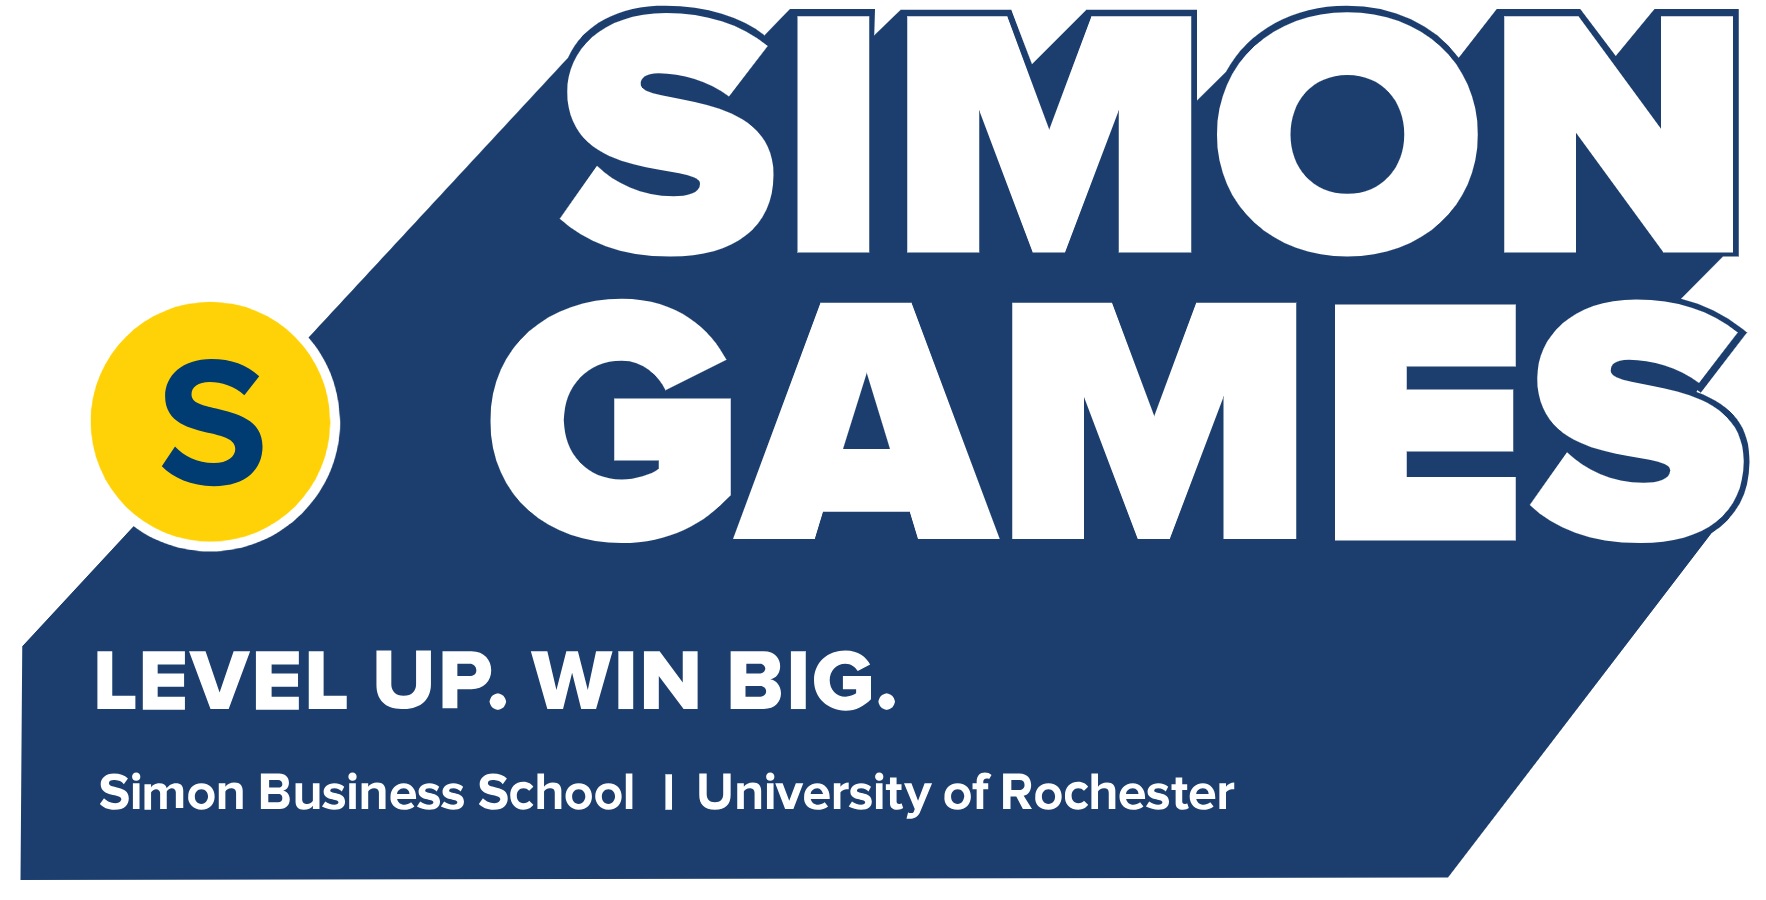 Simon Games logo with tagline "Level up. Win big."